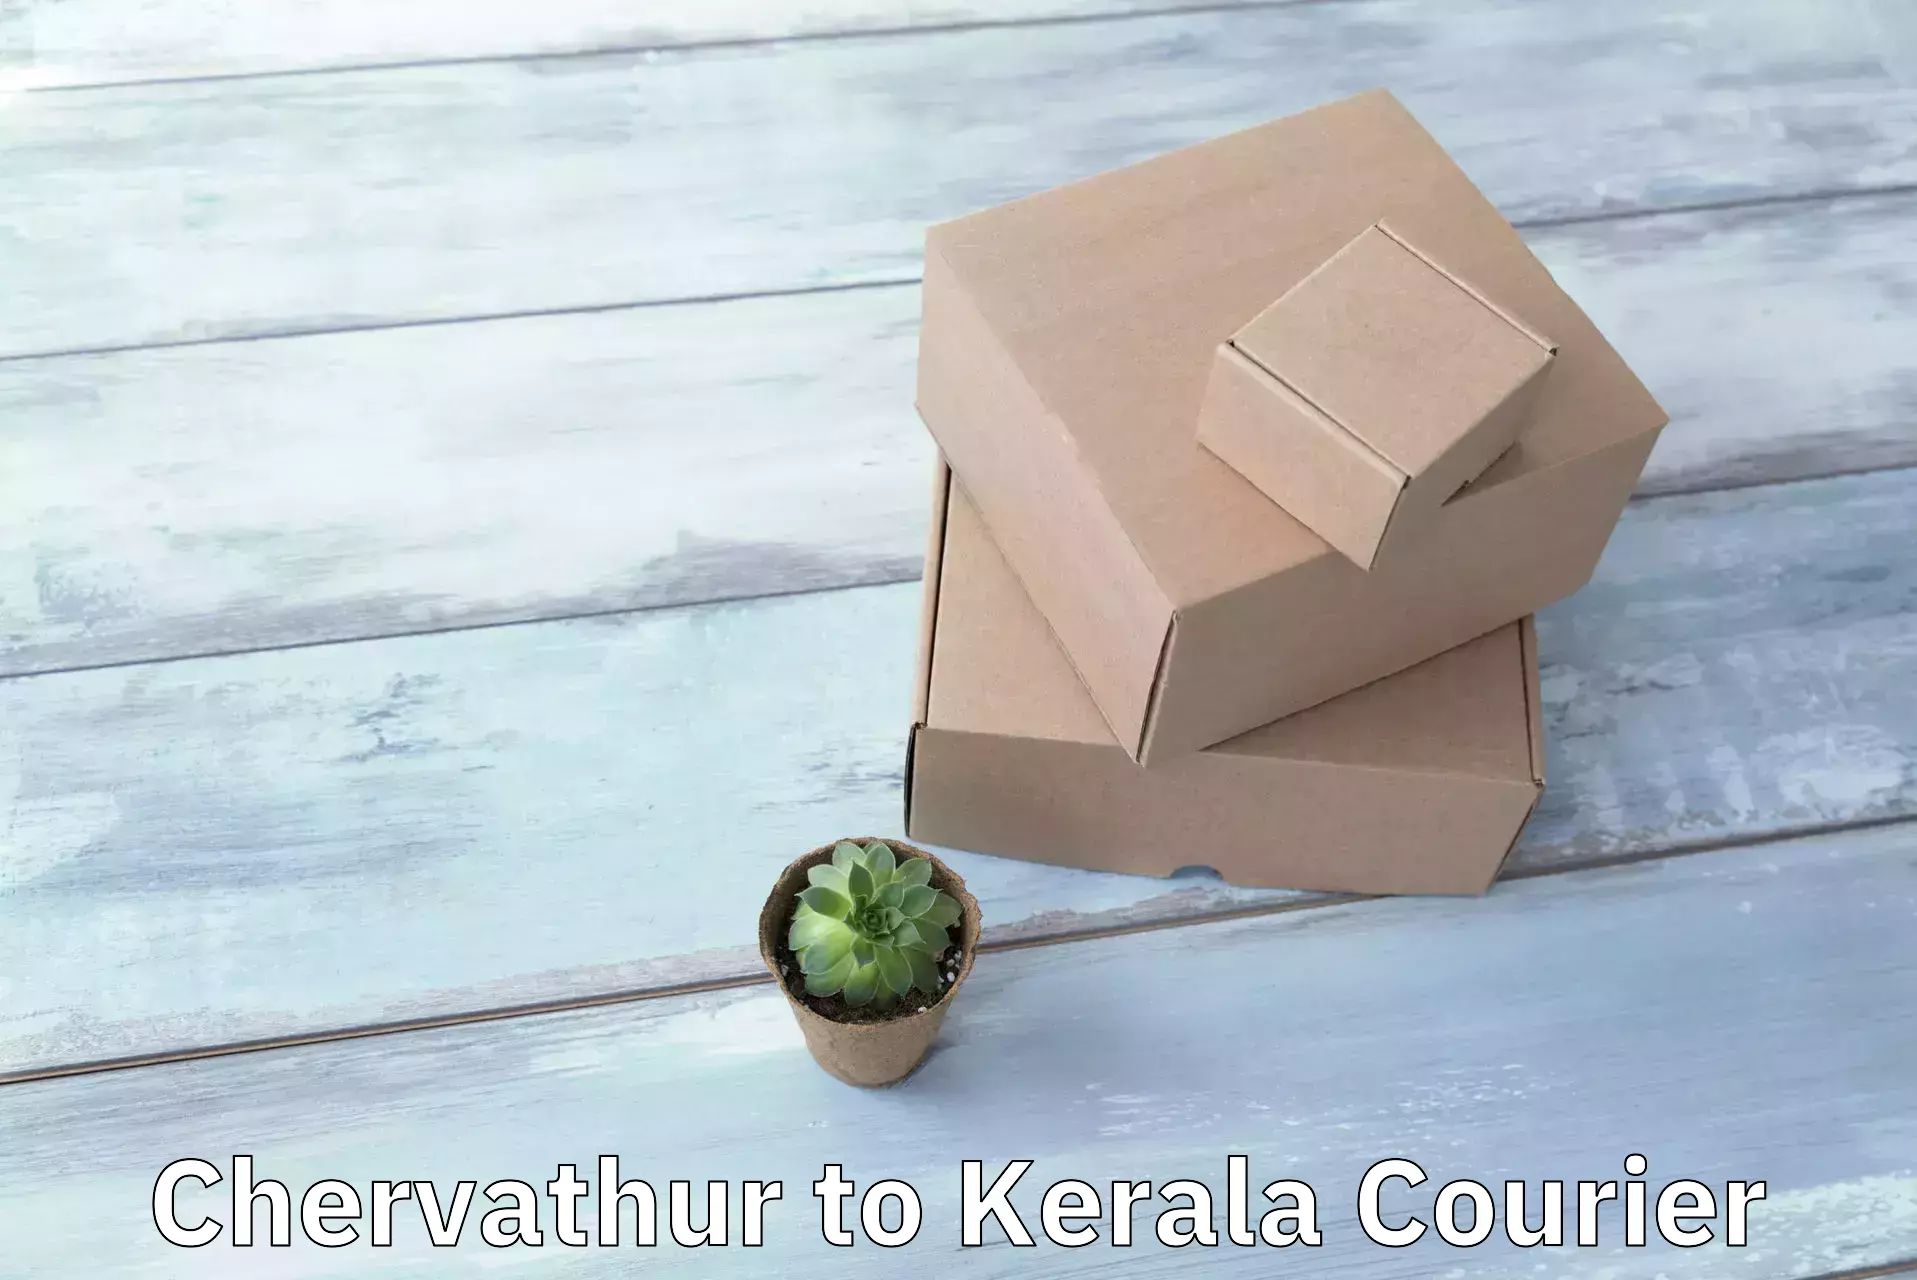 Courier service partnerships Chervathur to Payyanur